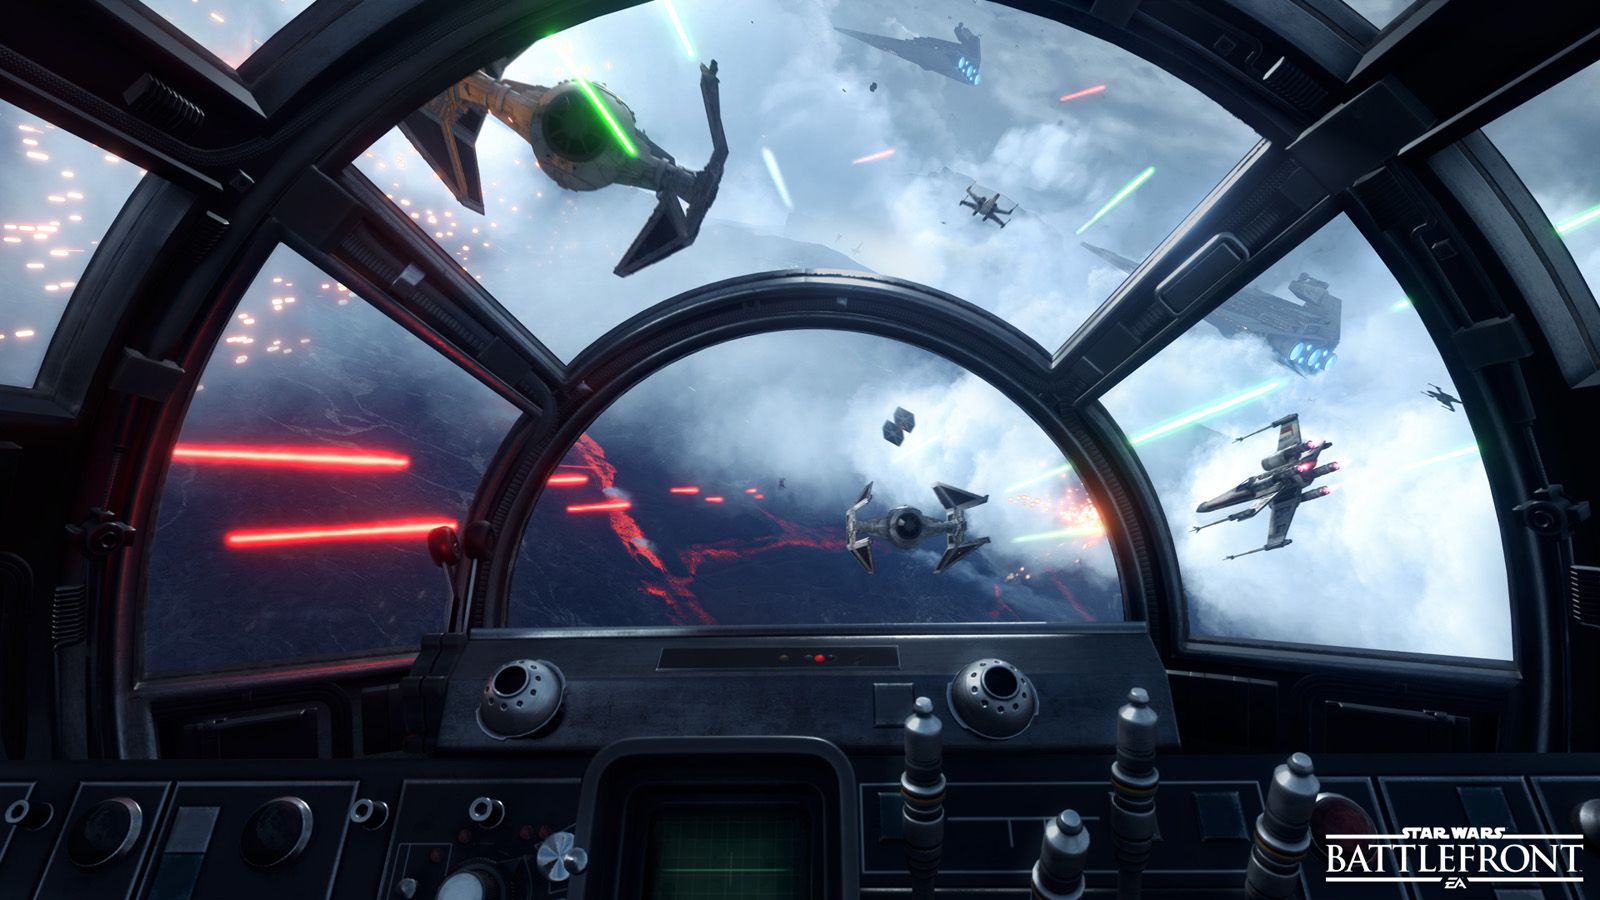 star wars battlefront review image 4